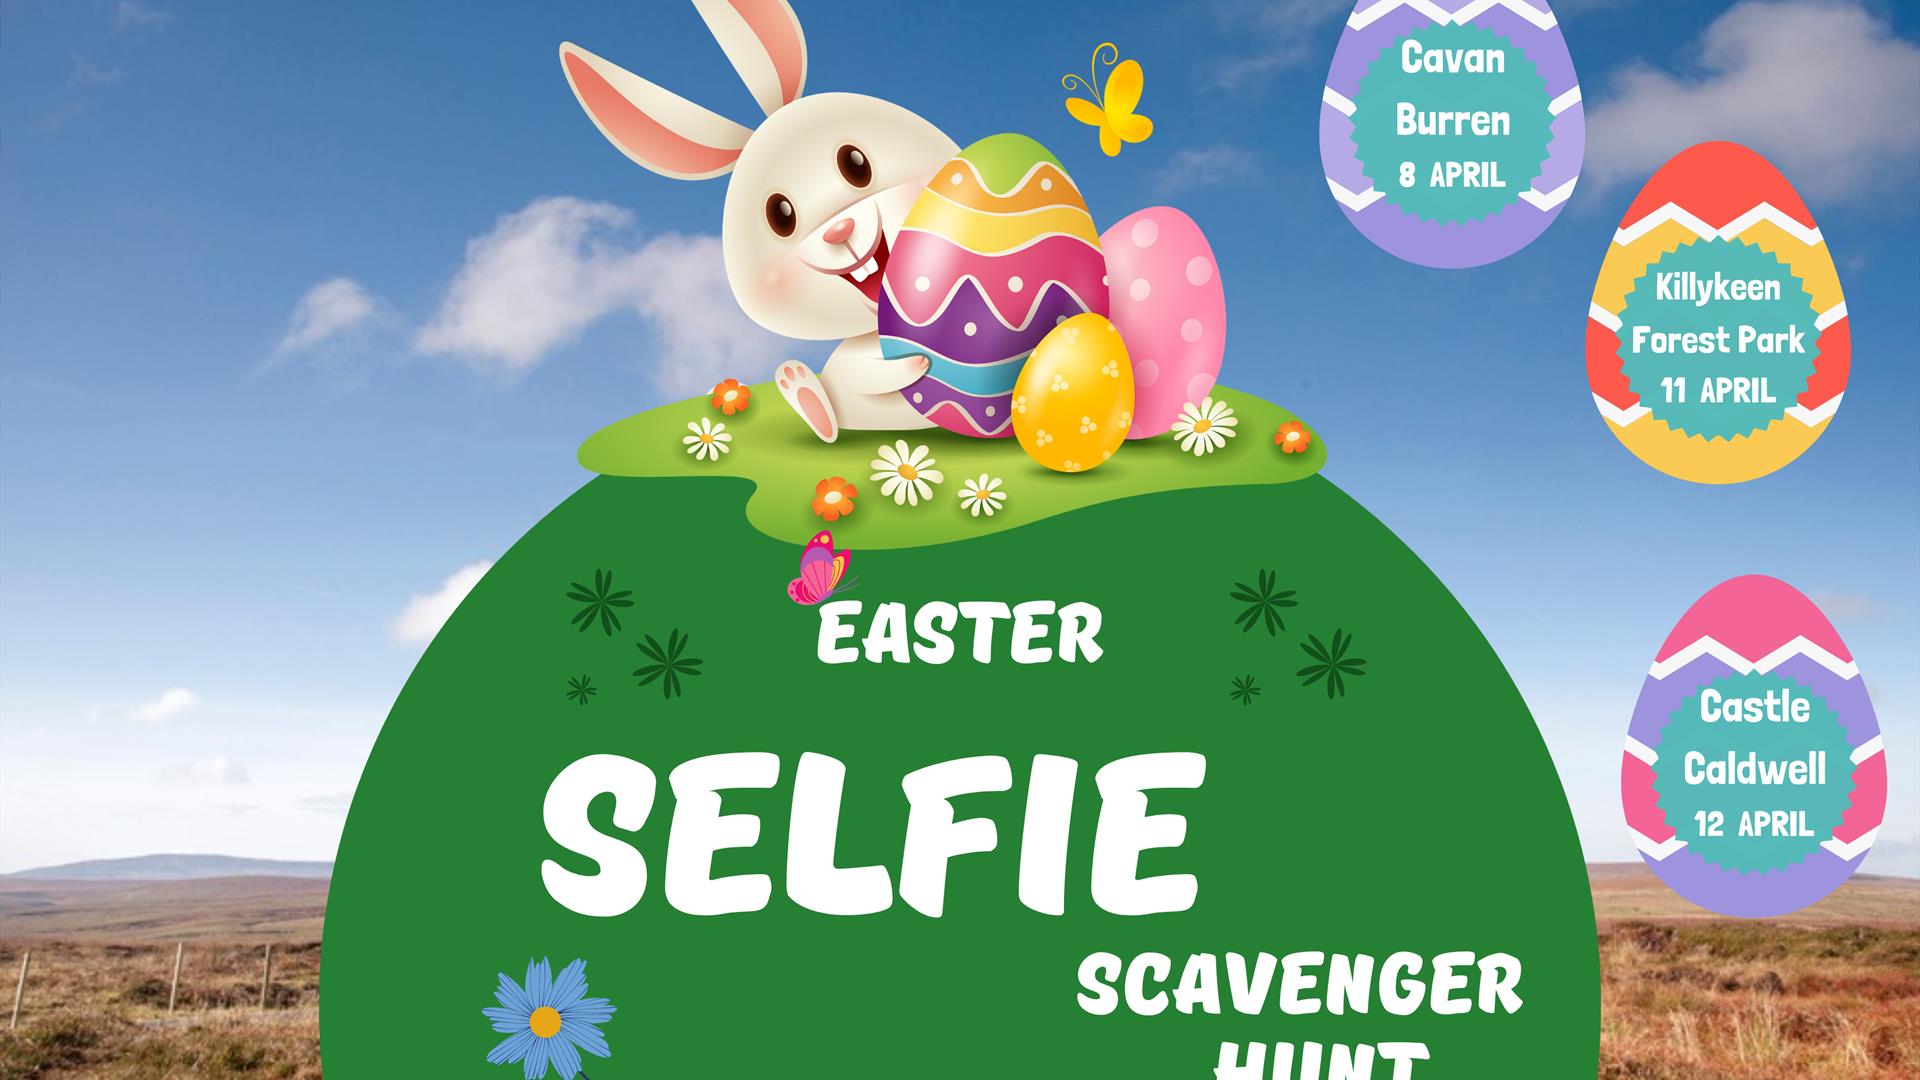 Easter selfie scavenger hunt.